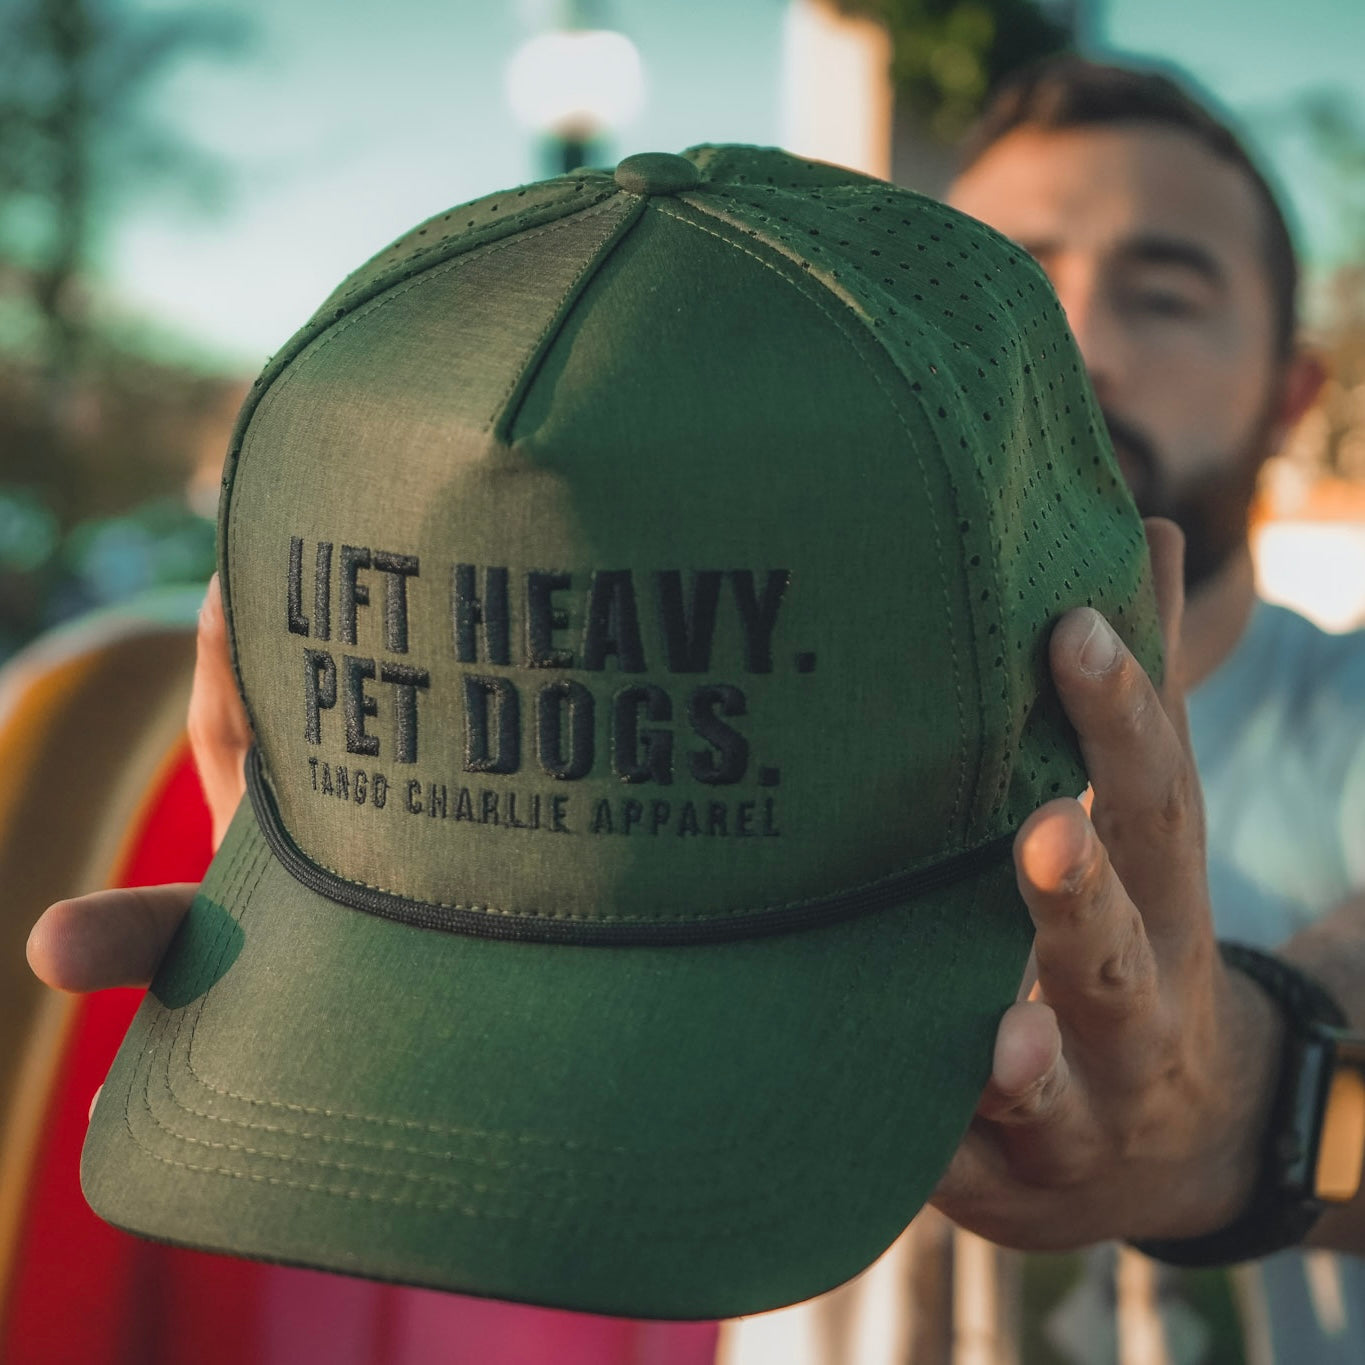 Lift Heavy. Pet Dogs. - Army Snapback Hat